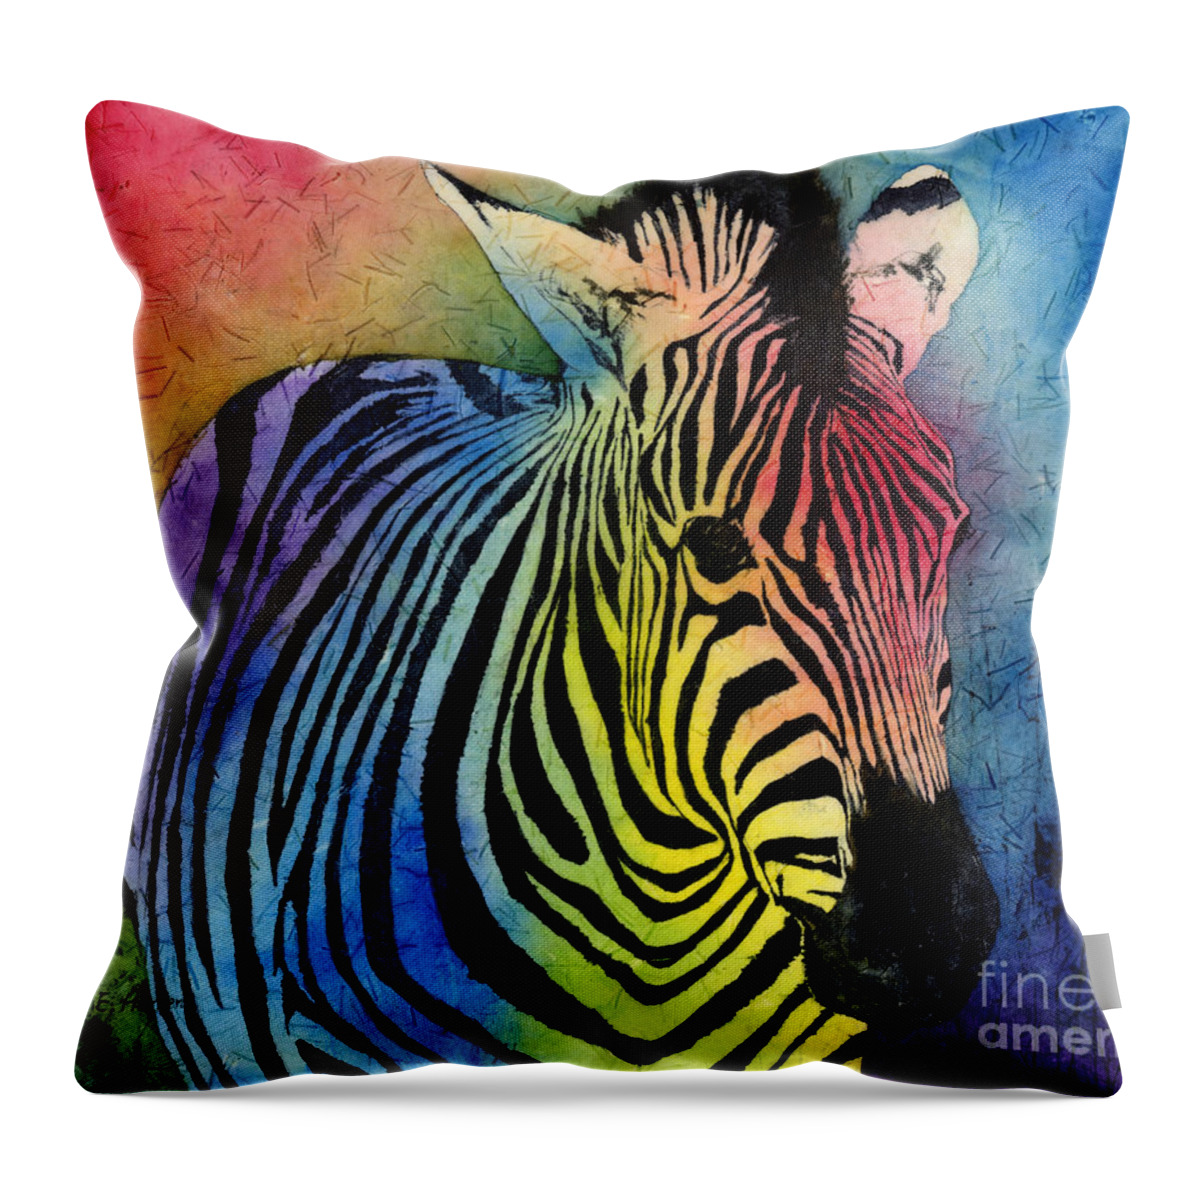 Zebra Throw Pillow featuring the painting Rainbow Zebra by Hailey E Herrera